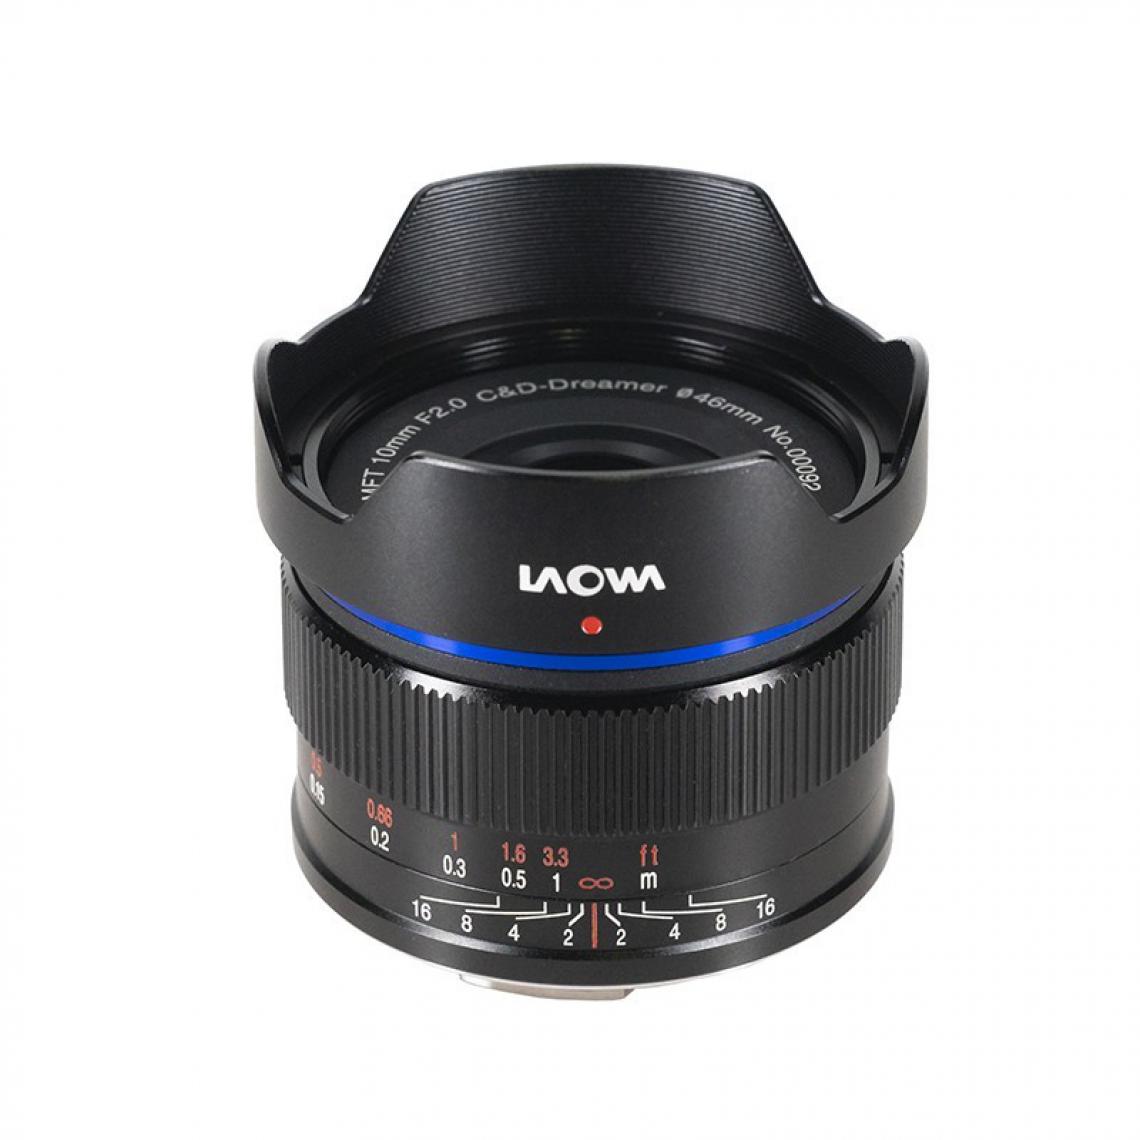 Tokina - LAOWA Objectif 10mm f/2 Zero-D pour Micro 4/3 - Objectif Photo